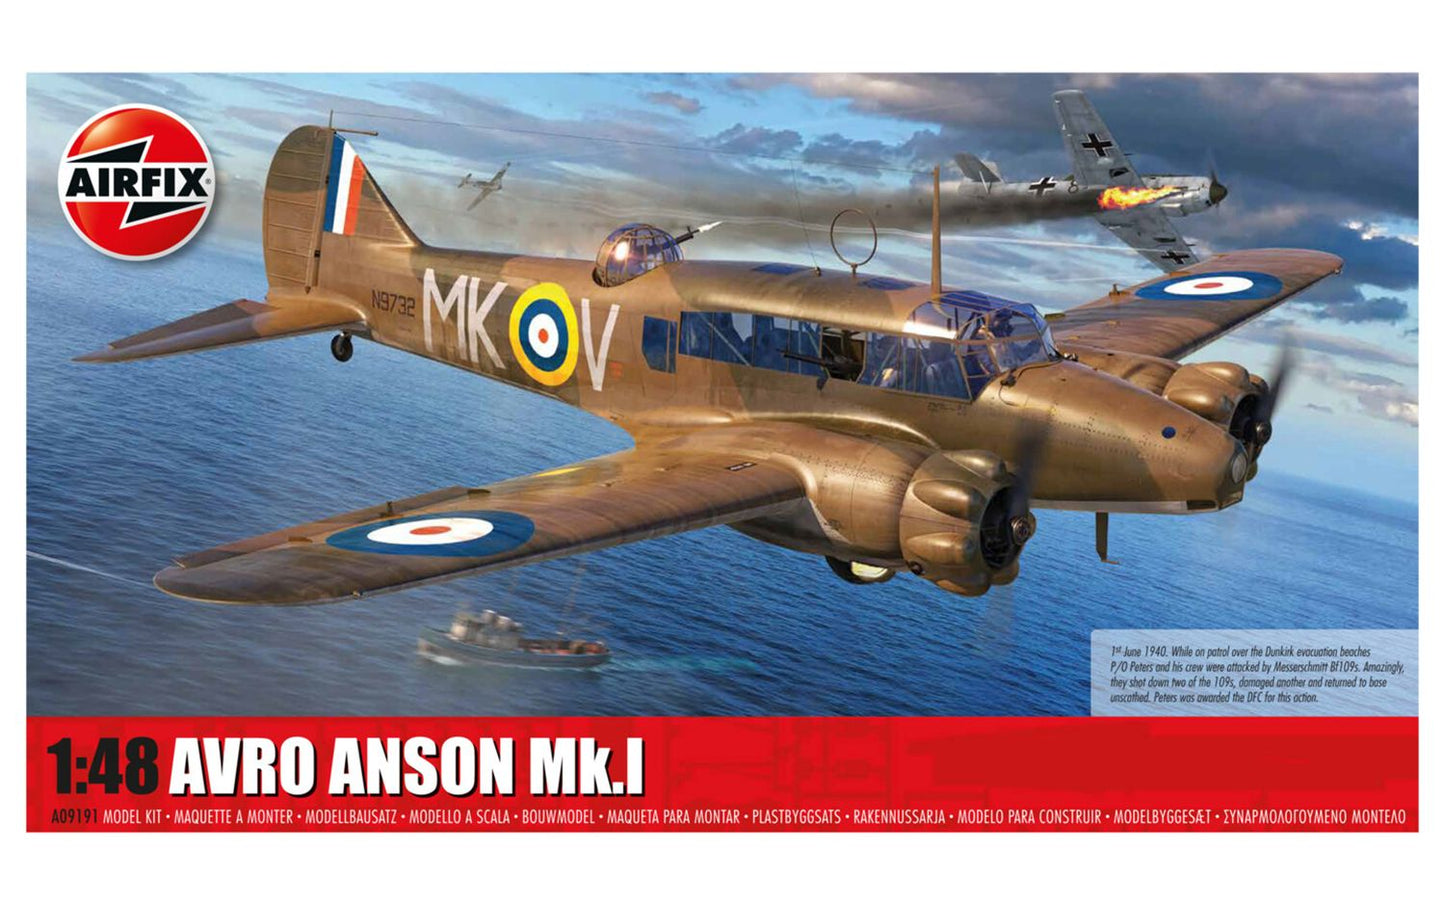 Airfix Products A09191 1:48 Avro Anson Mk.I Aircraft Plastic Model Kit